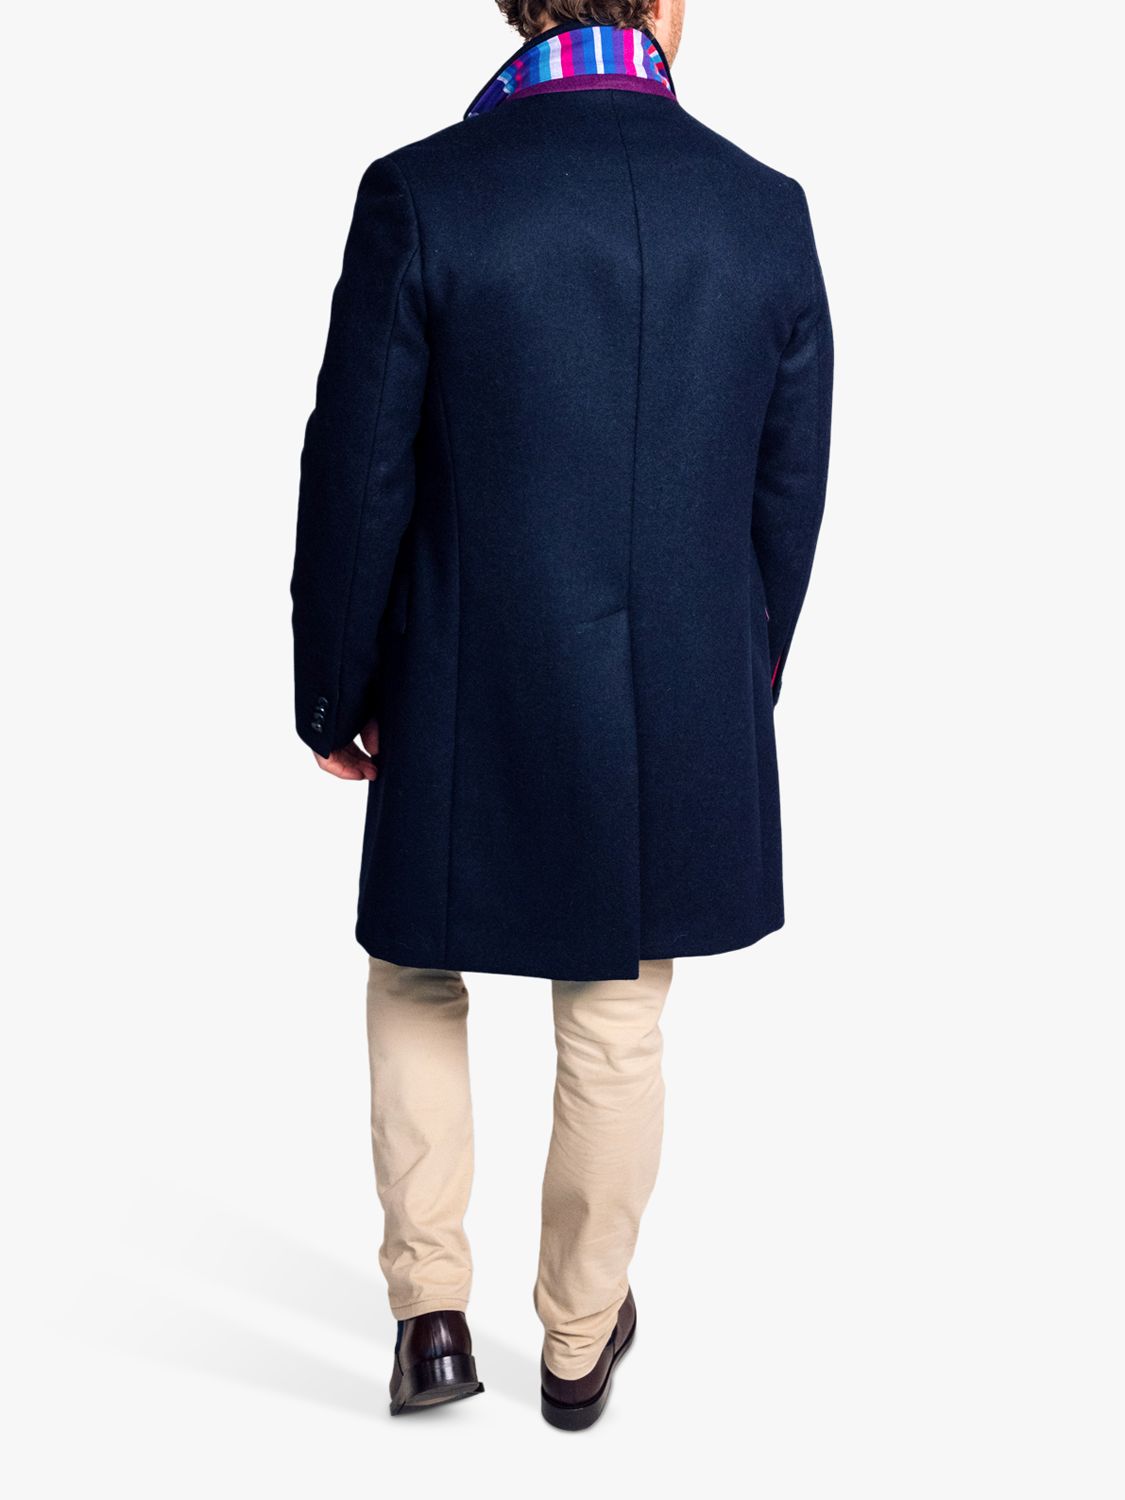 KOY Heritage British Wool Tailored Fit Overcoat, Navy, 38R